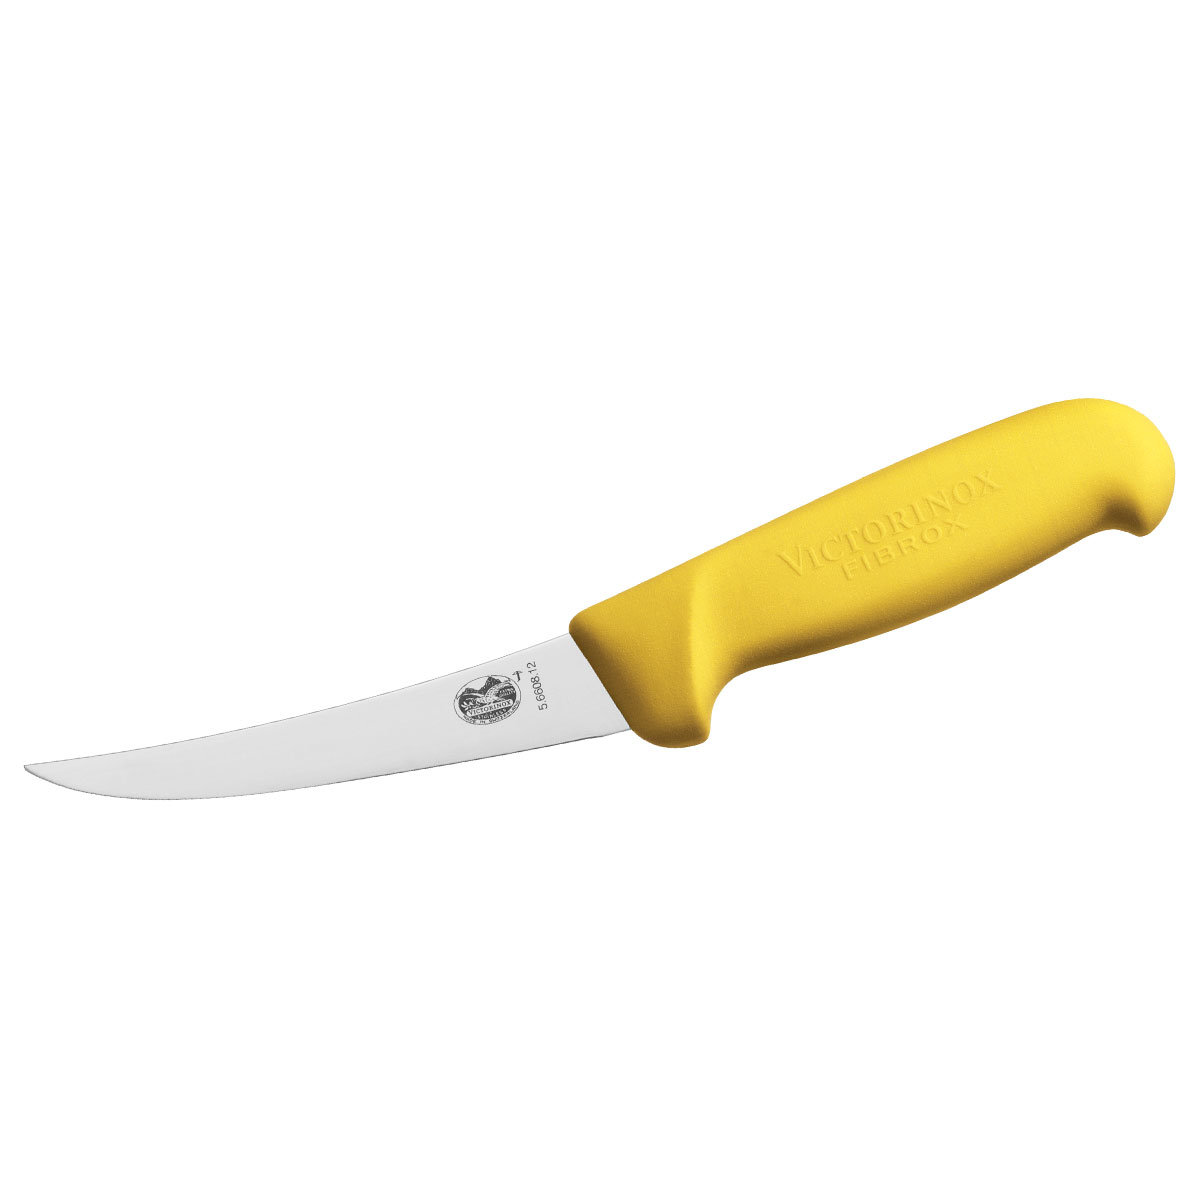 Victorinox Boning Knife, 12cm (5) - Curved, Narrow Blade - Yellow